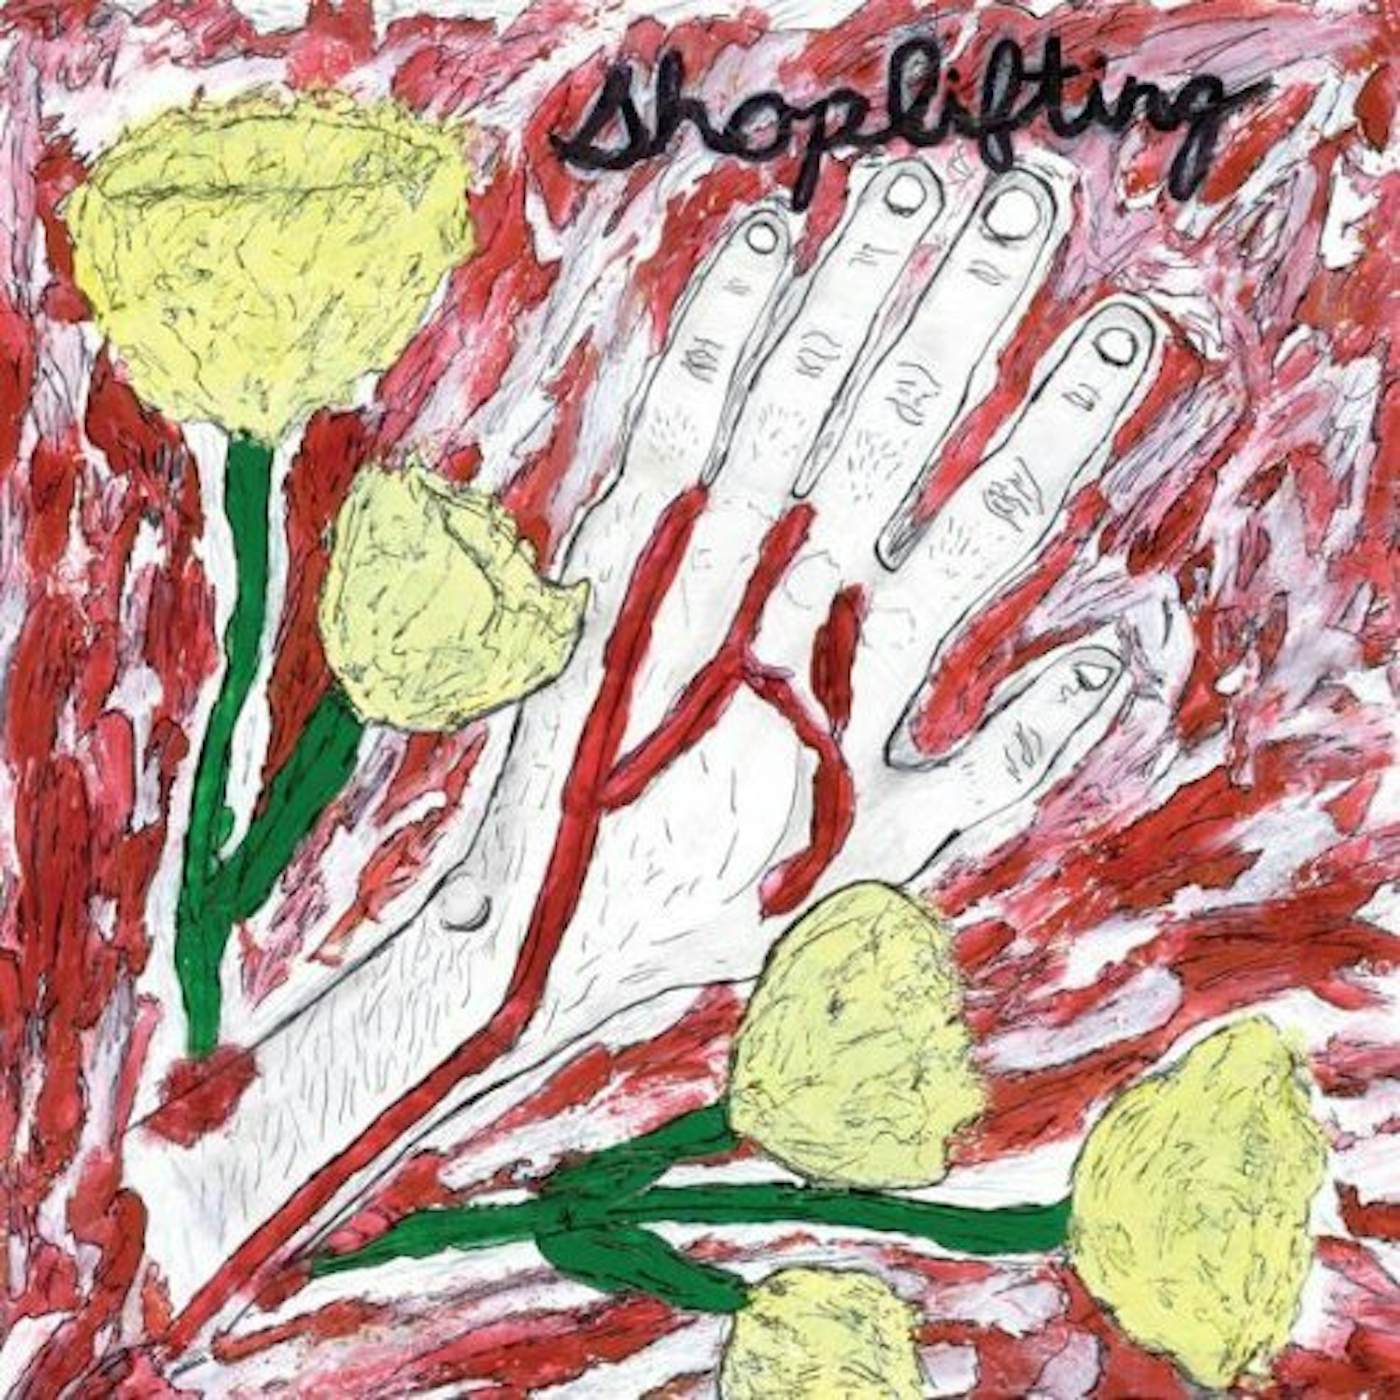 Shoplifting Body Stories Vinyl Record